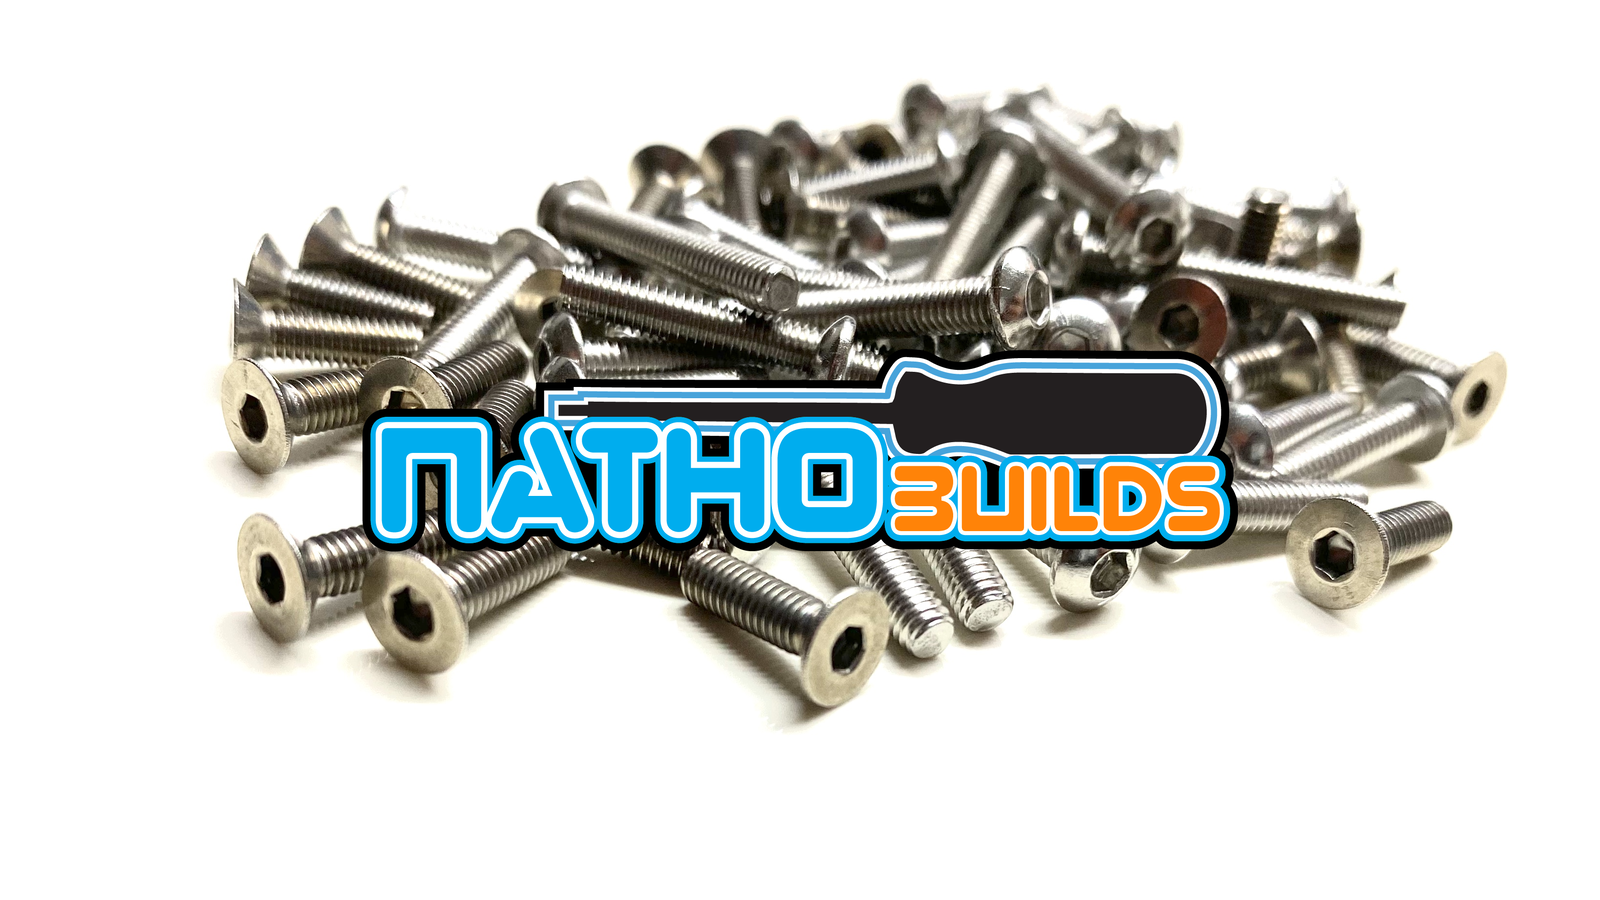 NathoBuilds: Stainless Steel Screw Kits - 2WD - Kyosho RB6